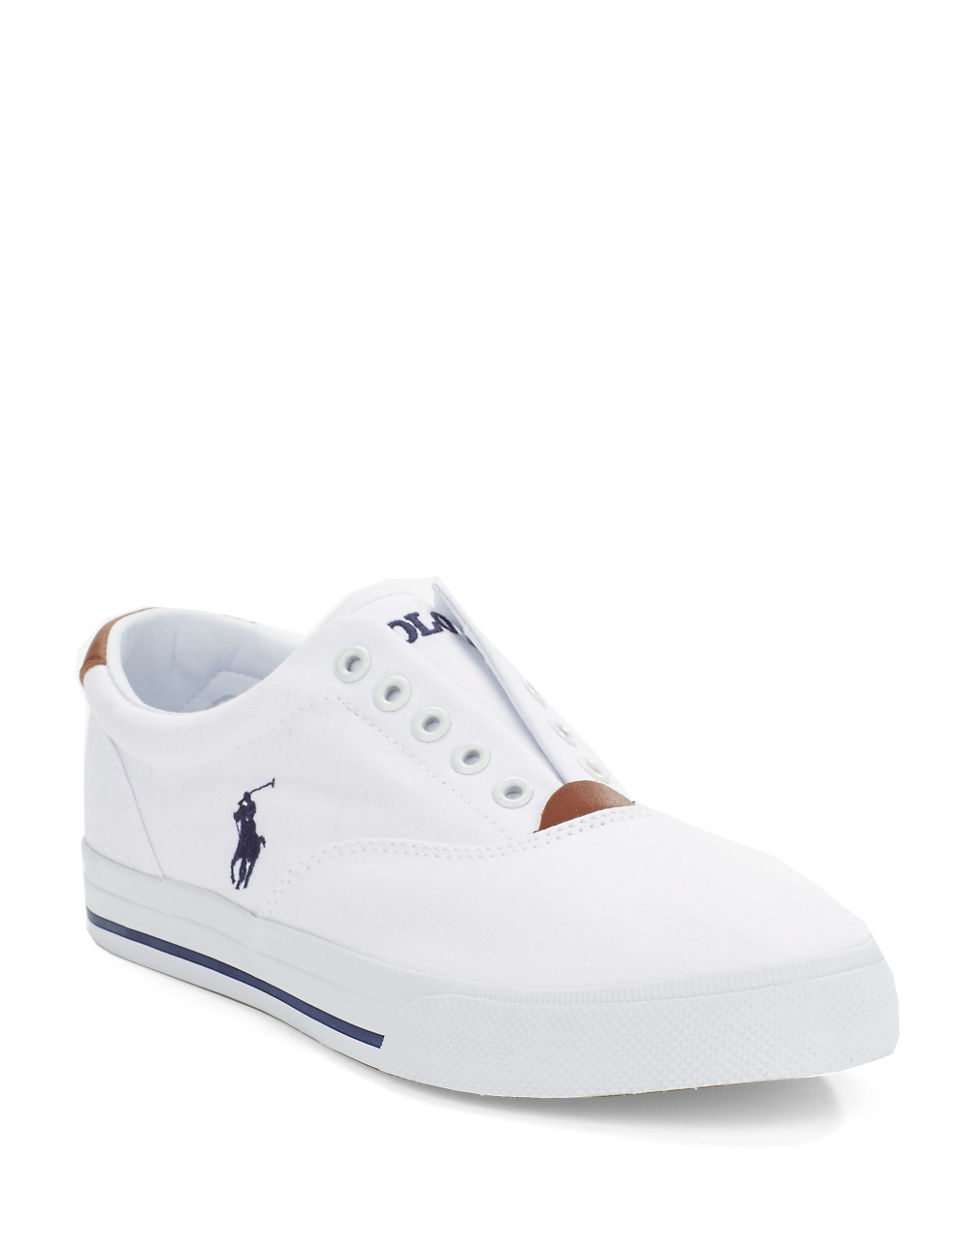 Lyst - Polo Ralph Lauren Vito Canvas Slip-On Sneakers in White for Men